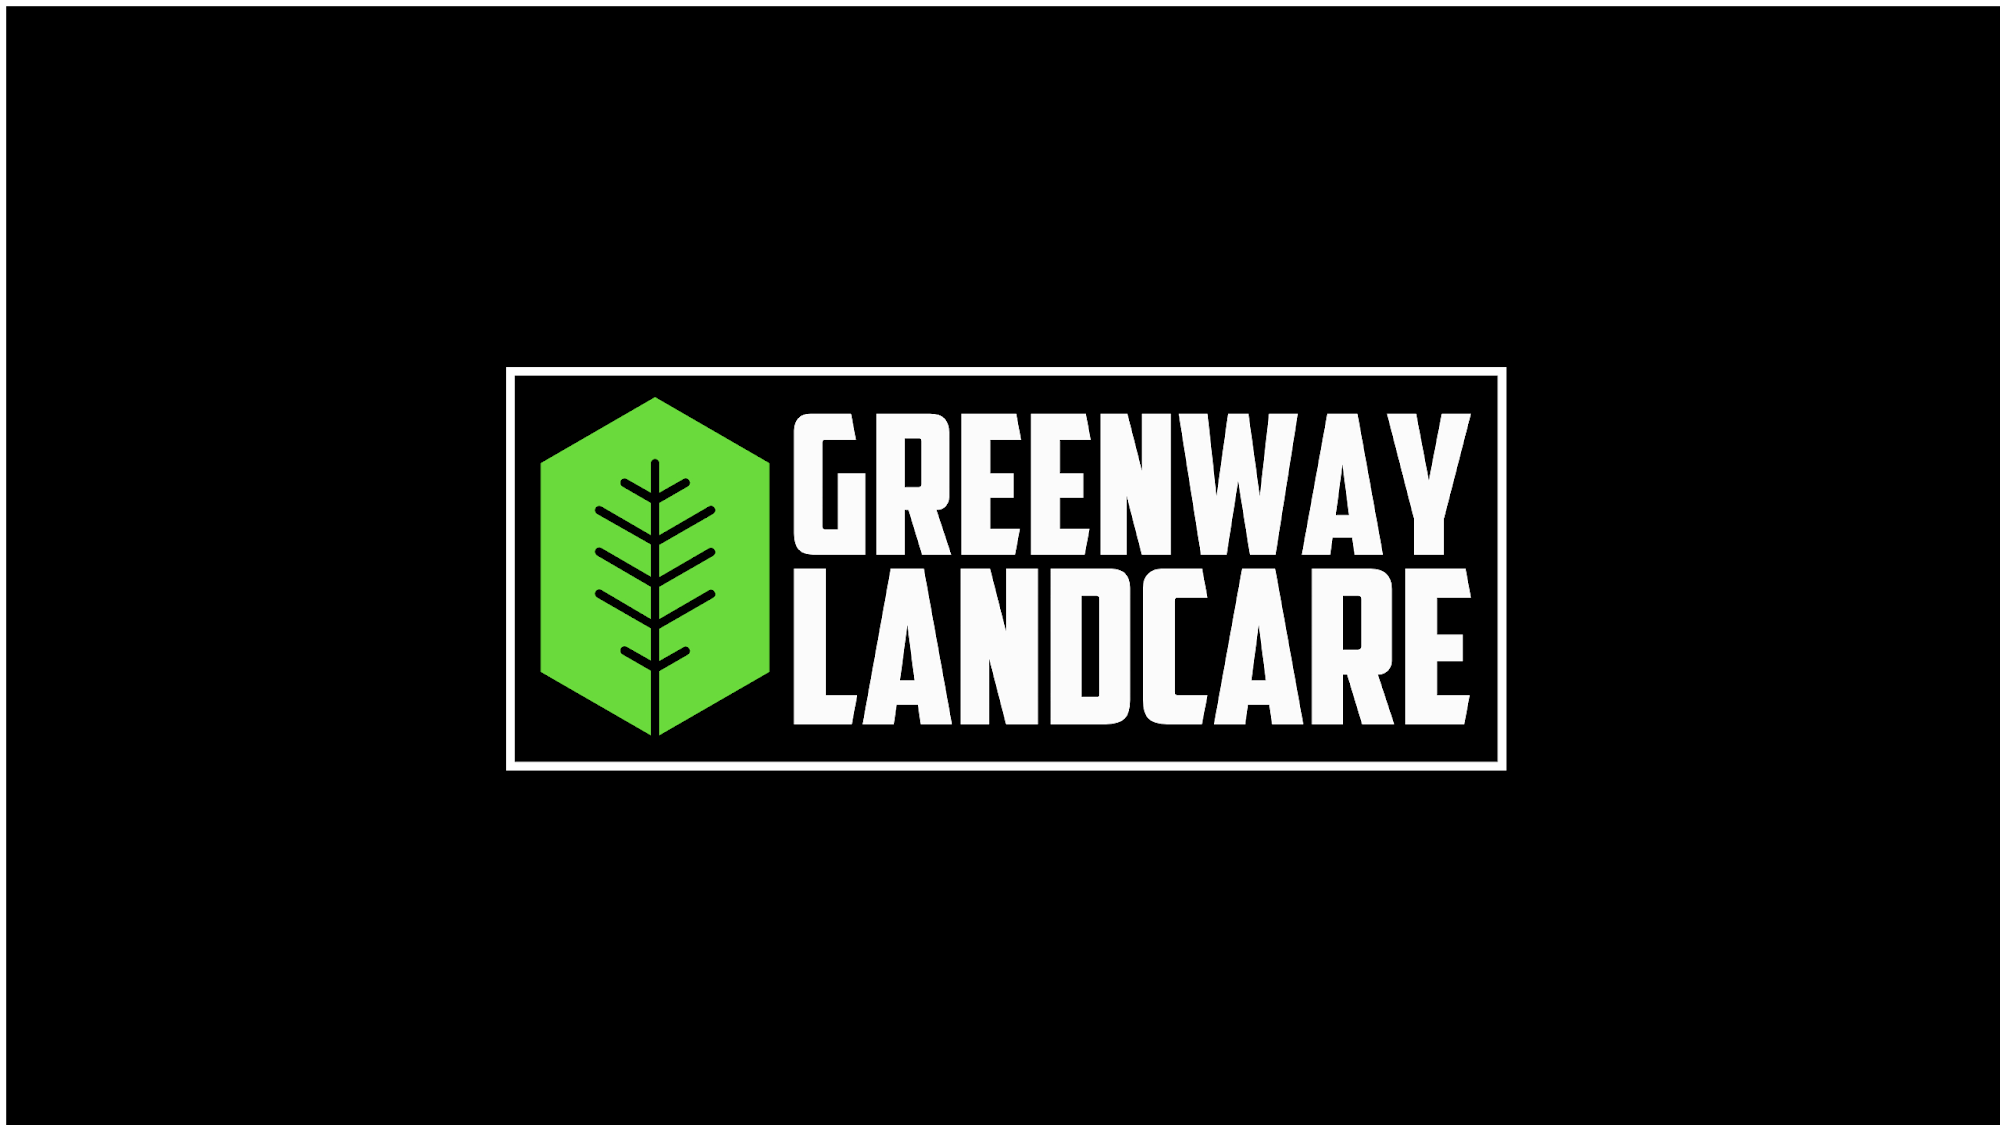 Greenway Landcare 10390 Flat Creek Rd, Quincy Florida 32351